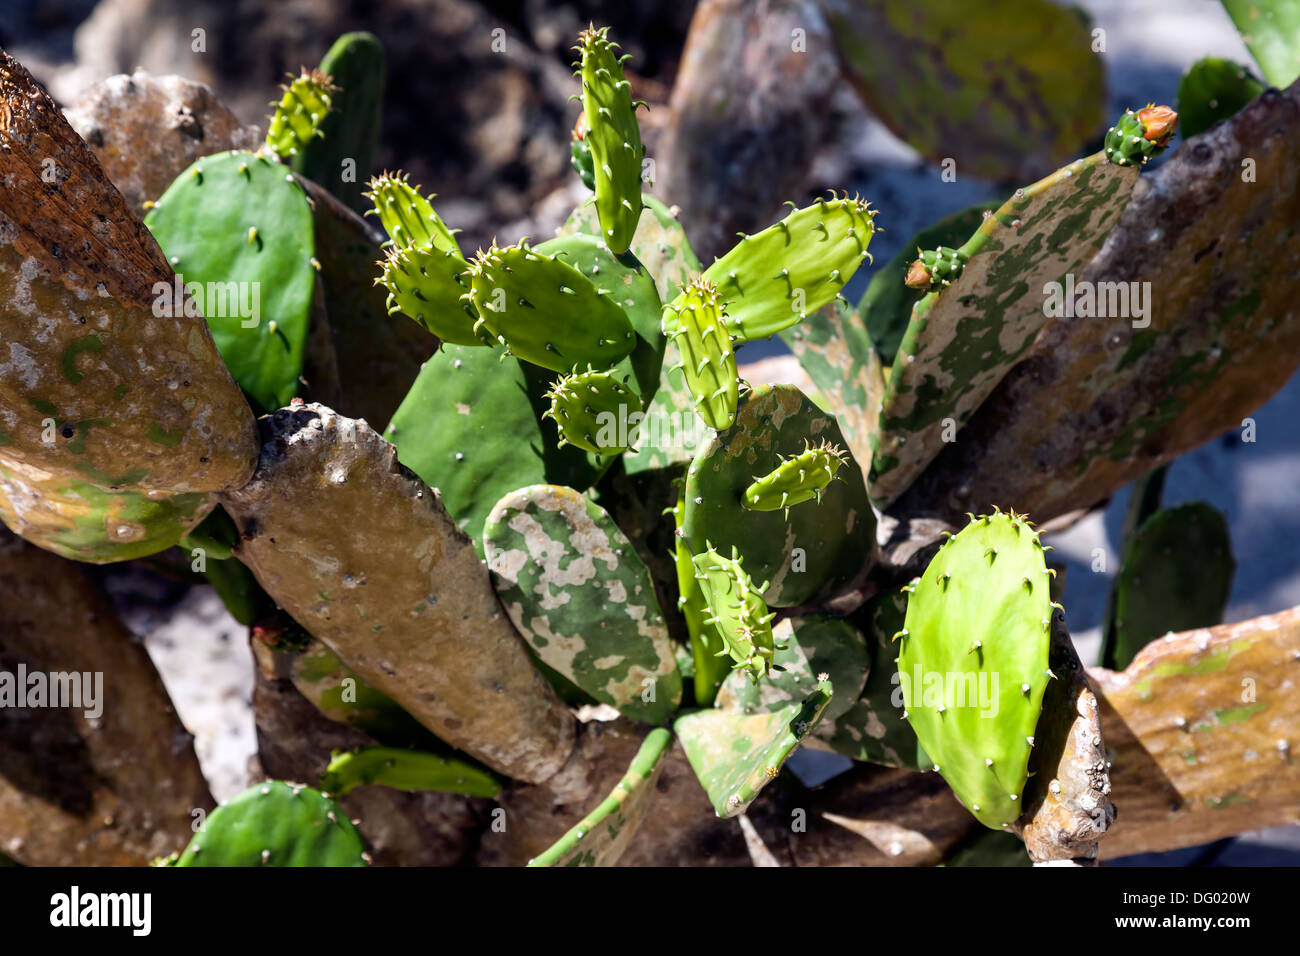 Foglie di cactus o nopales di una foglia piana denominata cactus Nopal. Foto Stock